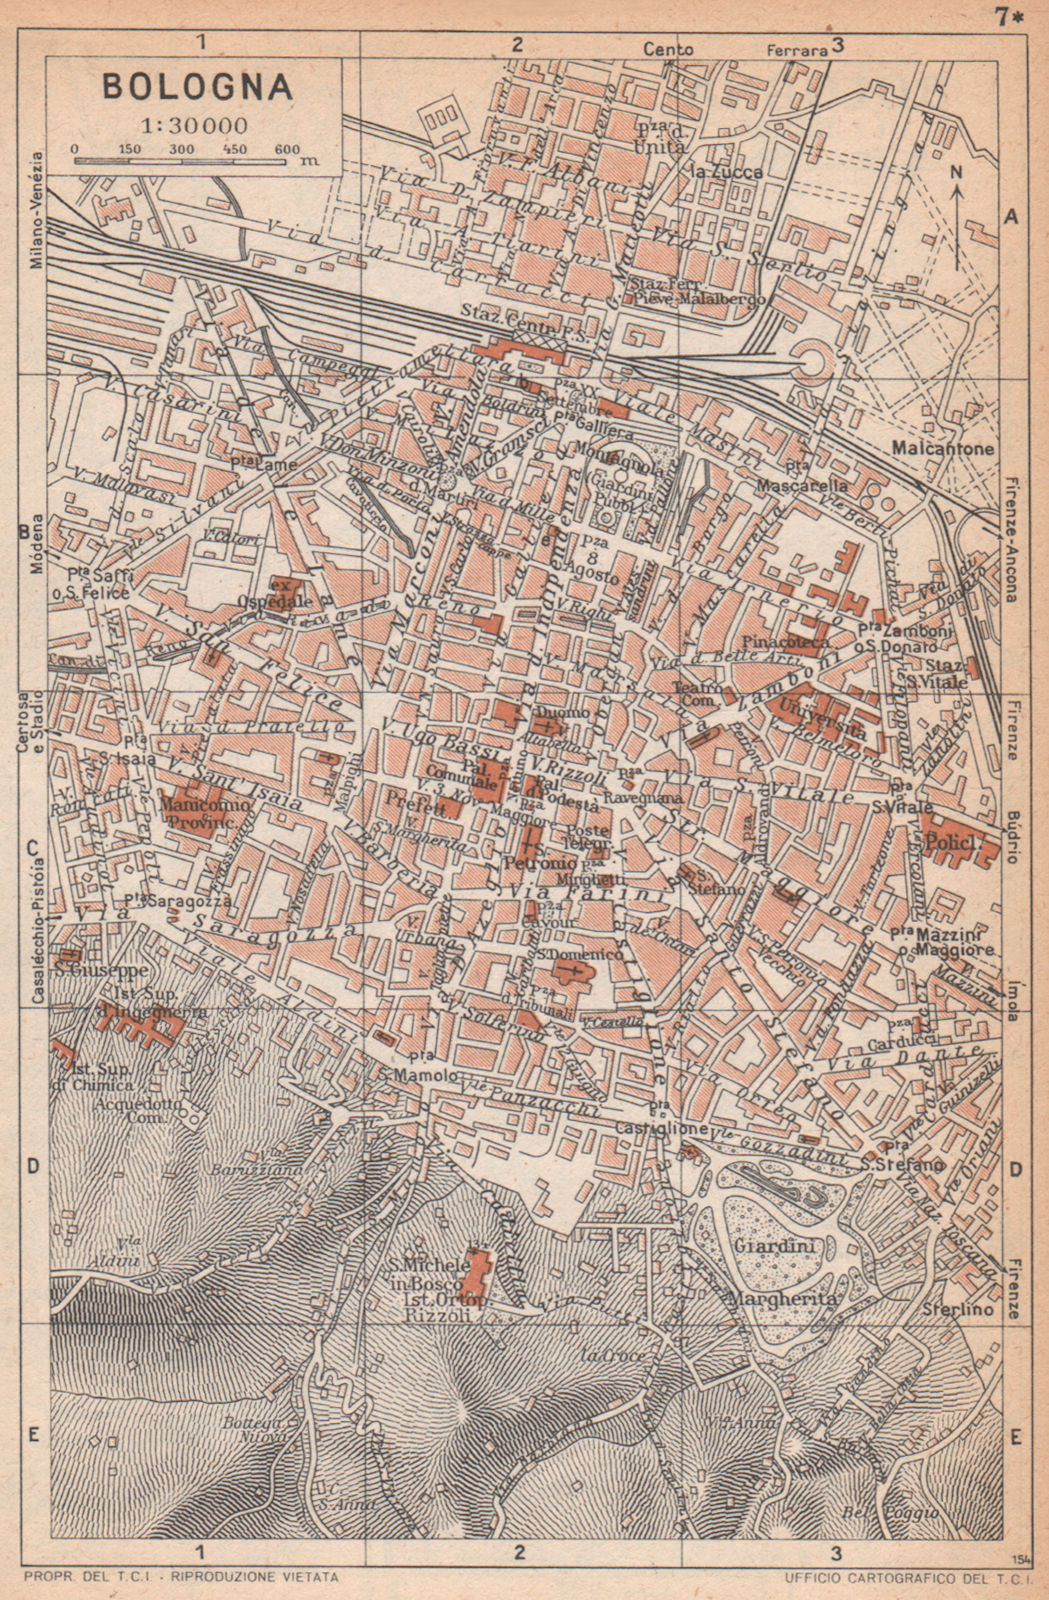 Associate Product BOLOGNA vintage town city map plan pianta della città. Italy 1958 old